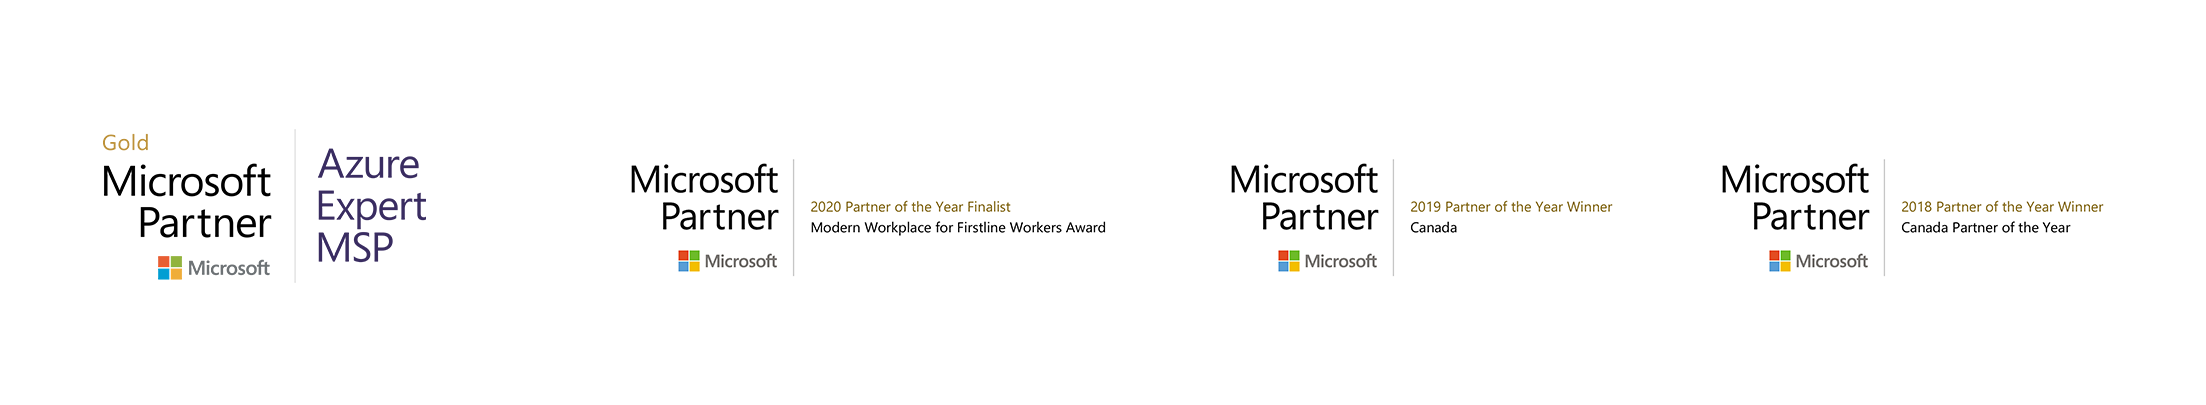 microsoft awards